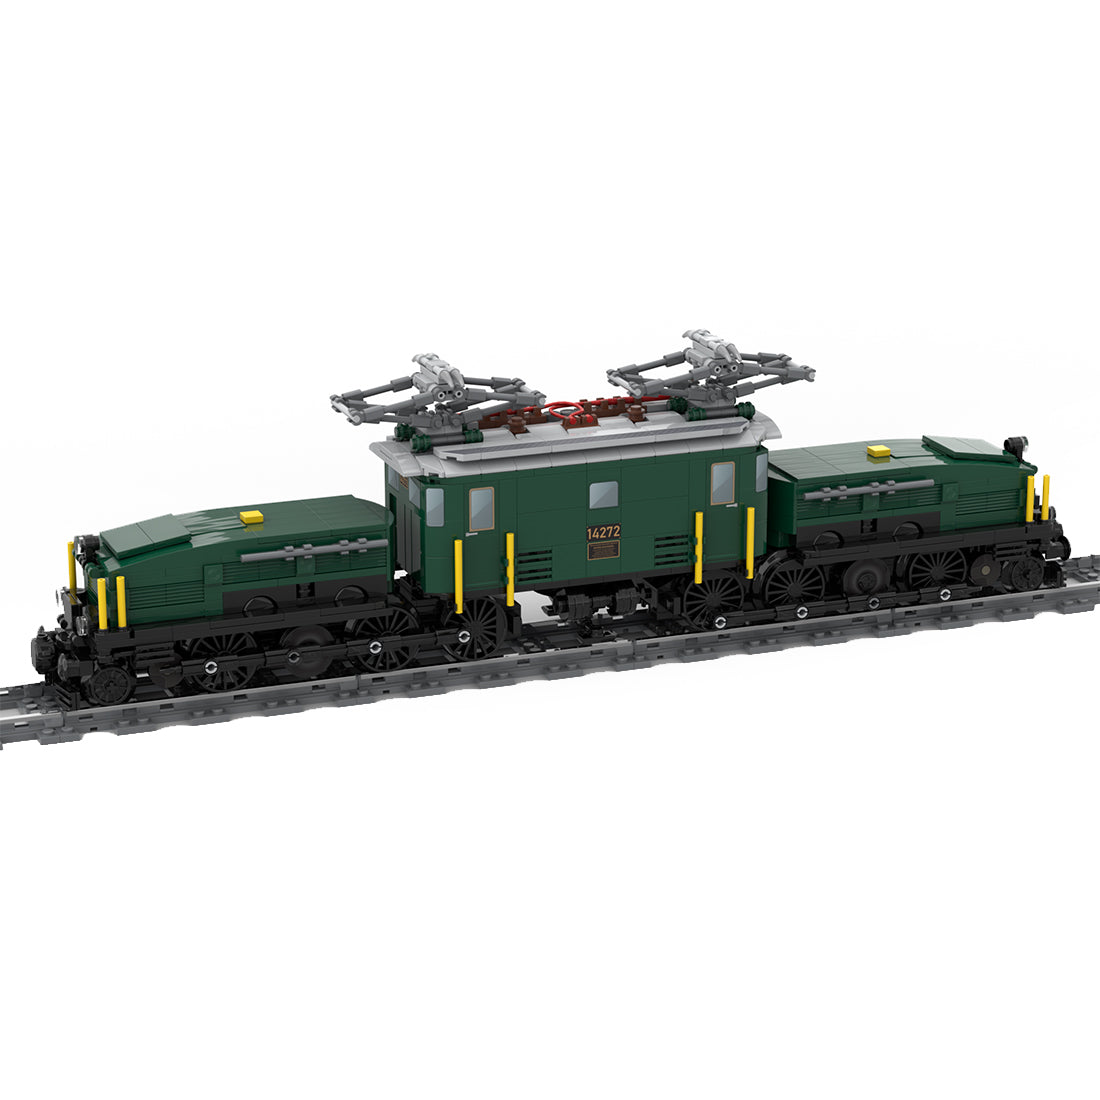 MOC-124952 Swiss Locomotive Crocodile - Green